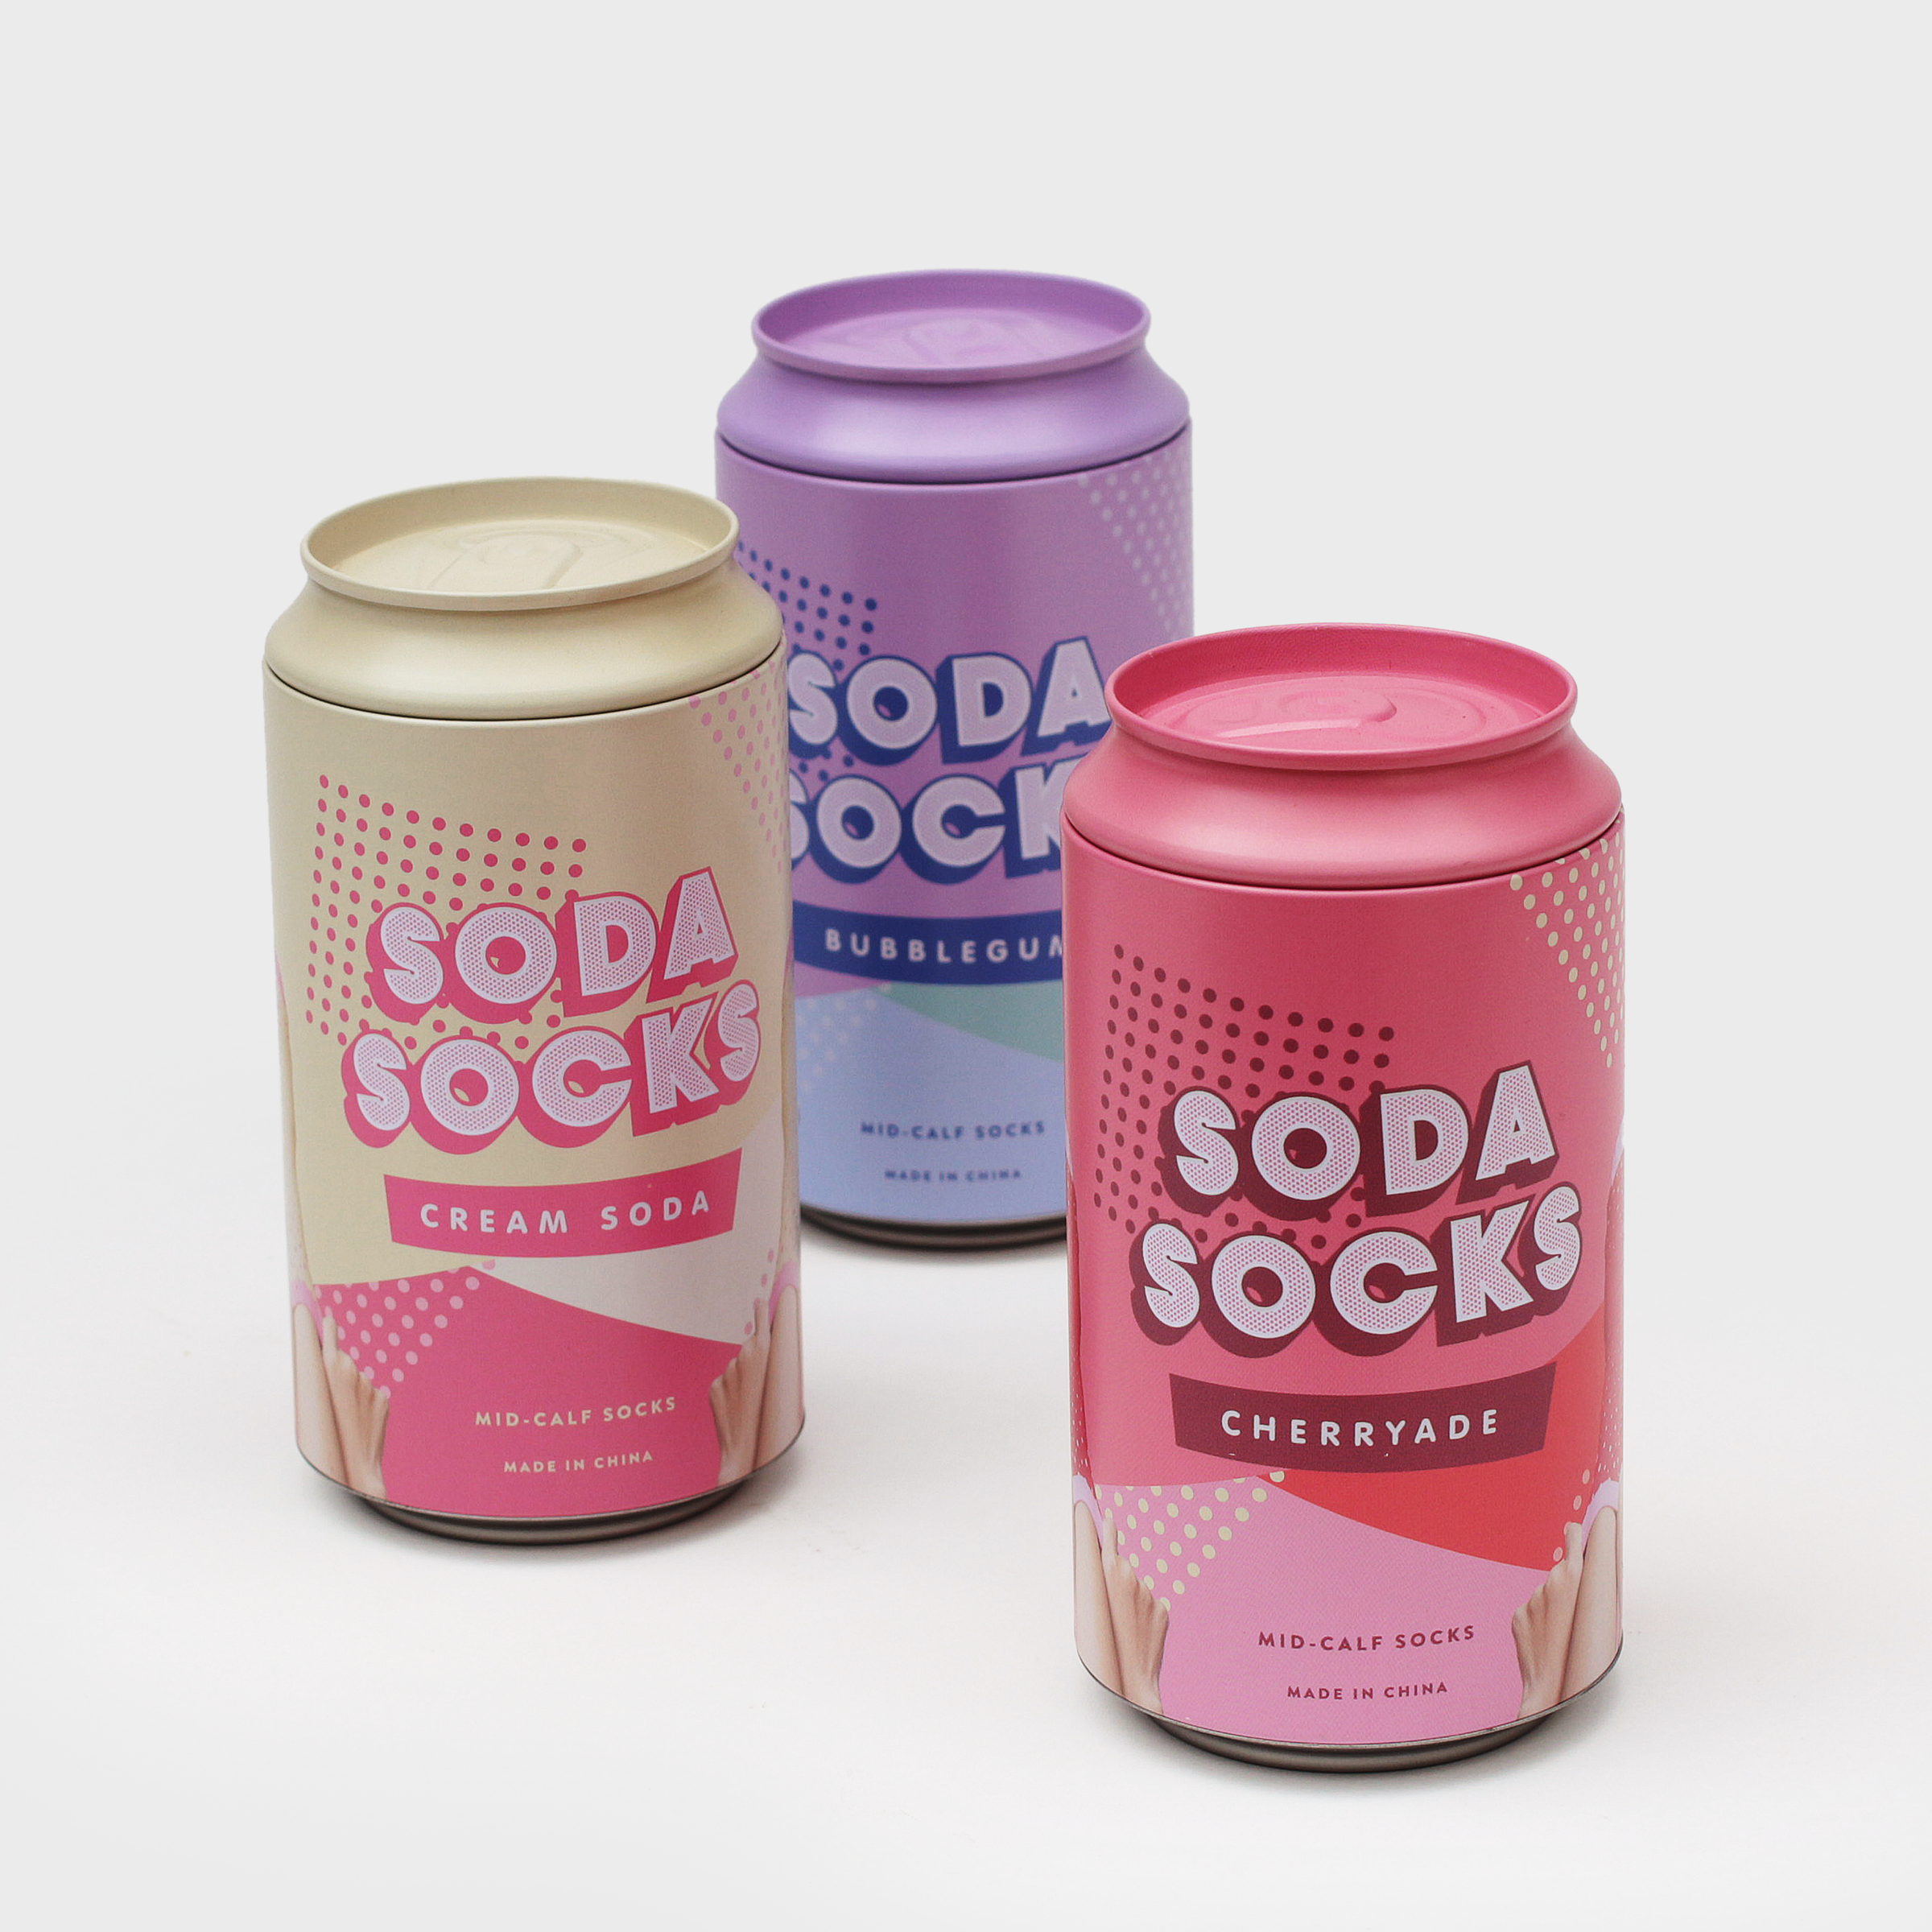 Soda Socks in a can